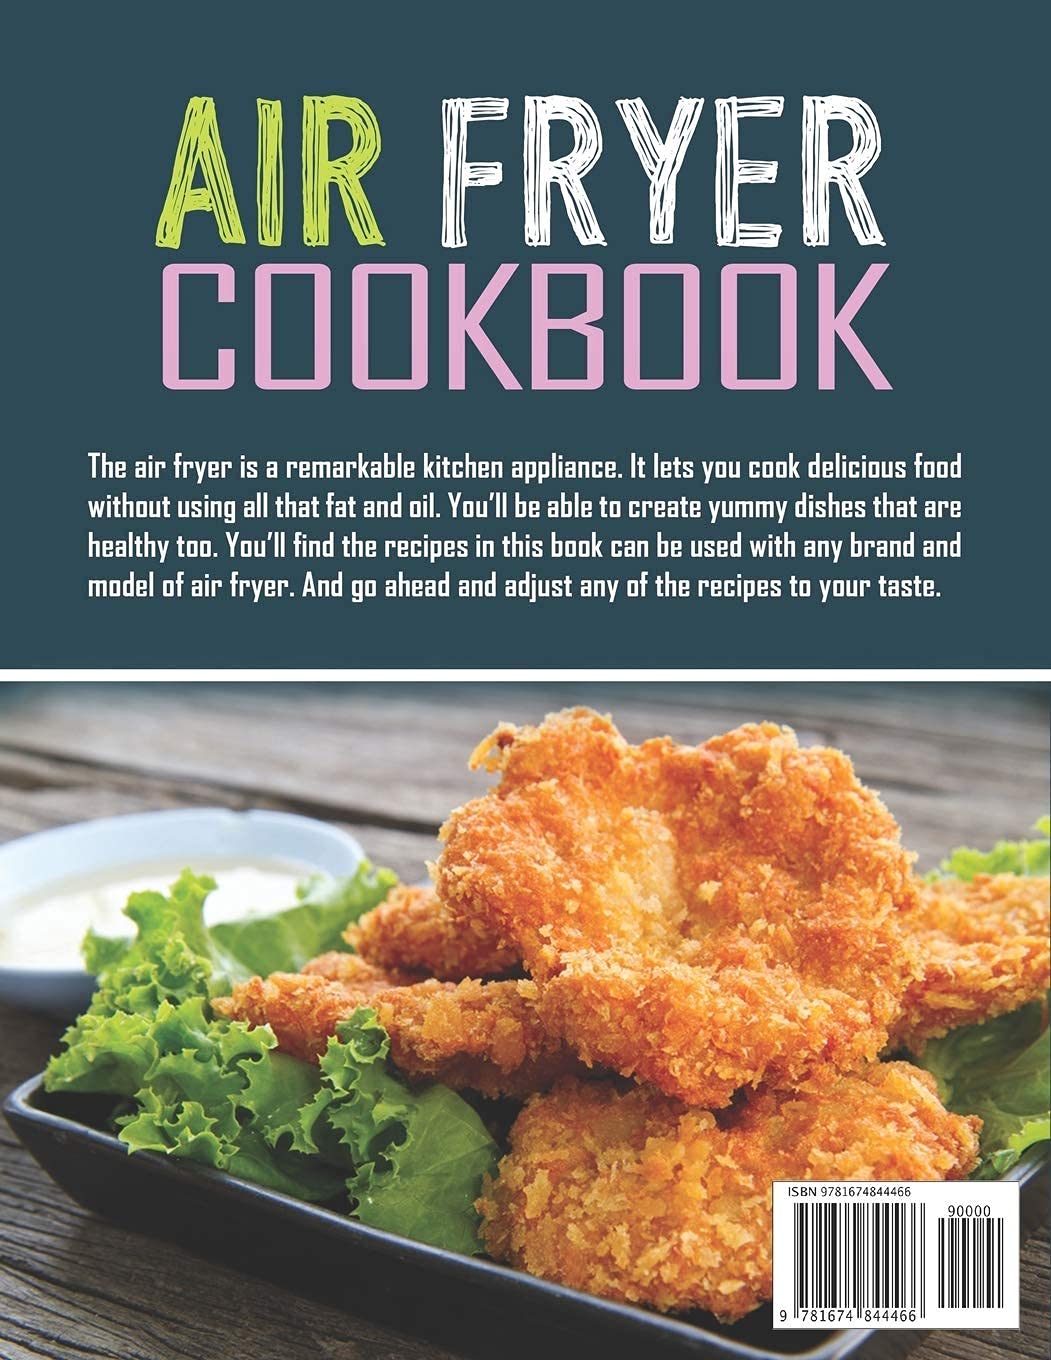 Ninja Foodi 2-Basket Air Fryer Cookbook: The Complete Guide of Ninja Foodi 2 -Basket Air Fryer with 600 Easy Tasty Recipes (Hardcover)